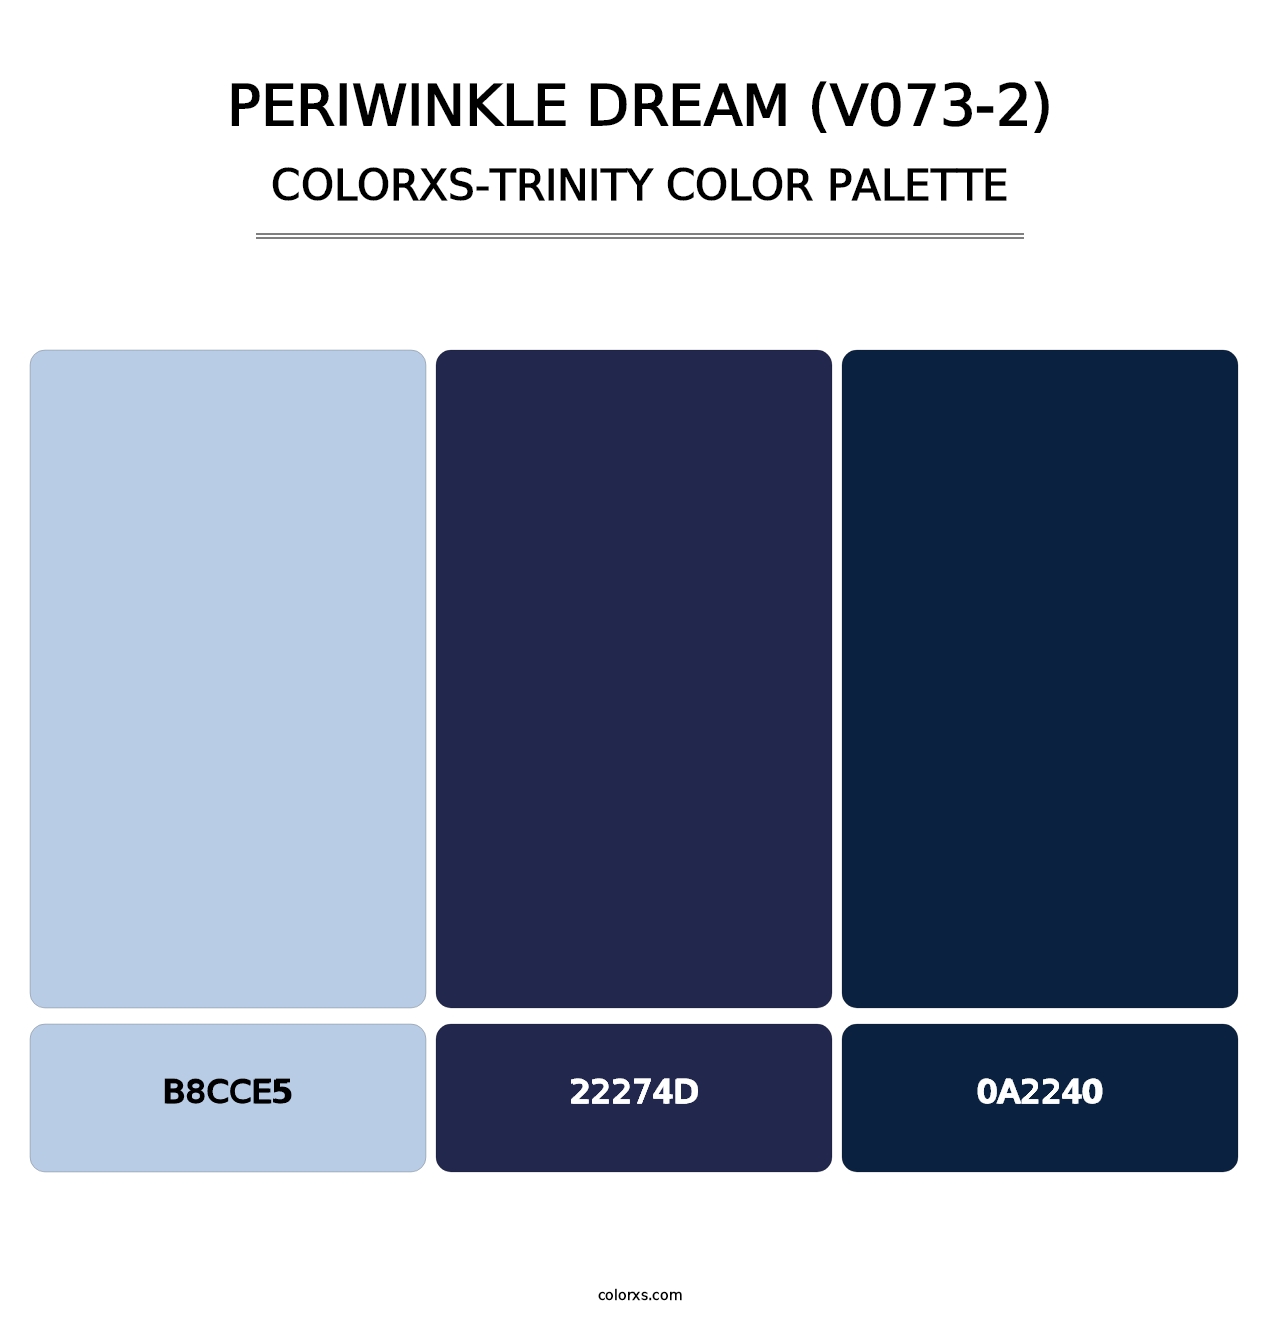 Periwinkle Dream (V073-2) - Colorxs Trinity Palette